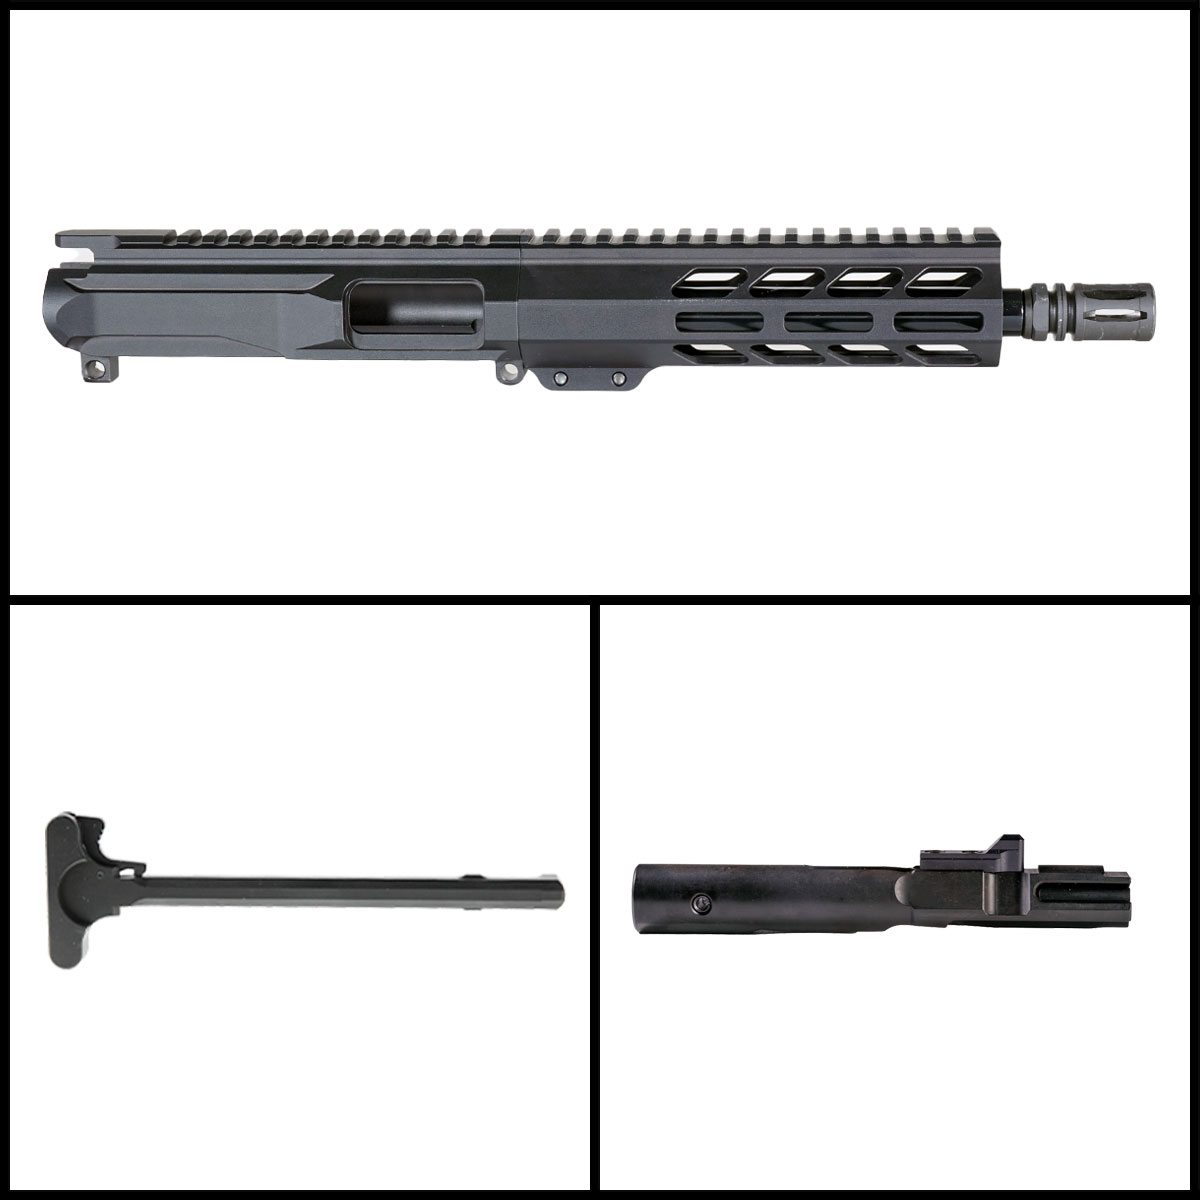 DDS 'Eternal Night Gen 2' 8.5-inch AR-15 9mm Nitride Pistol Complete Upper Build Kit